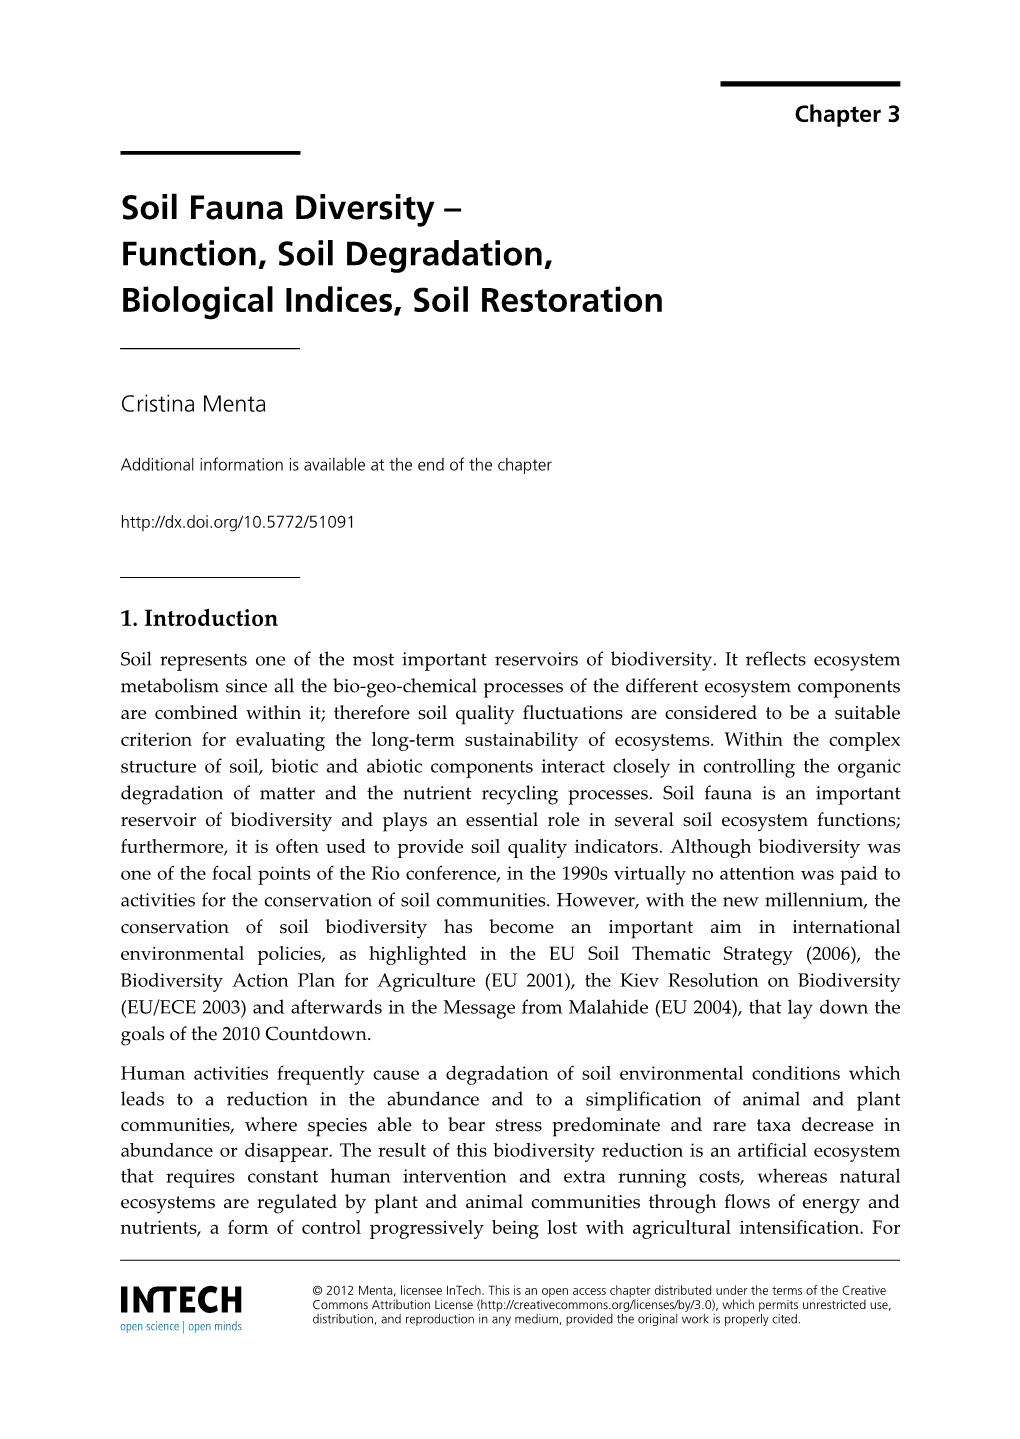 Soil Fauna Diversity – Function, Soil Degradation, Biological Indices, Soil Restoration